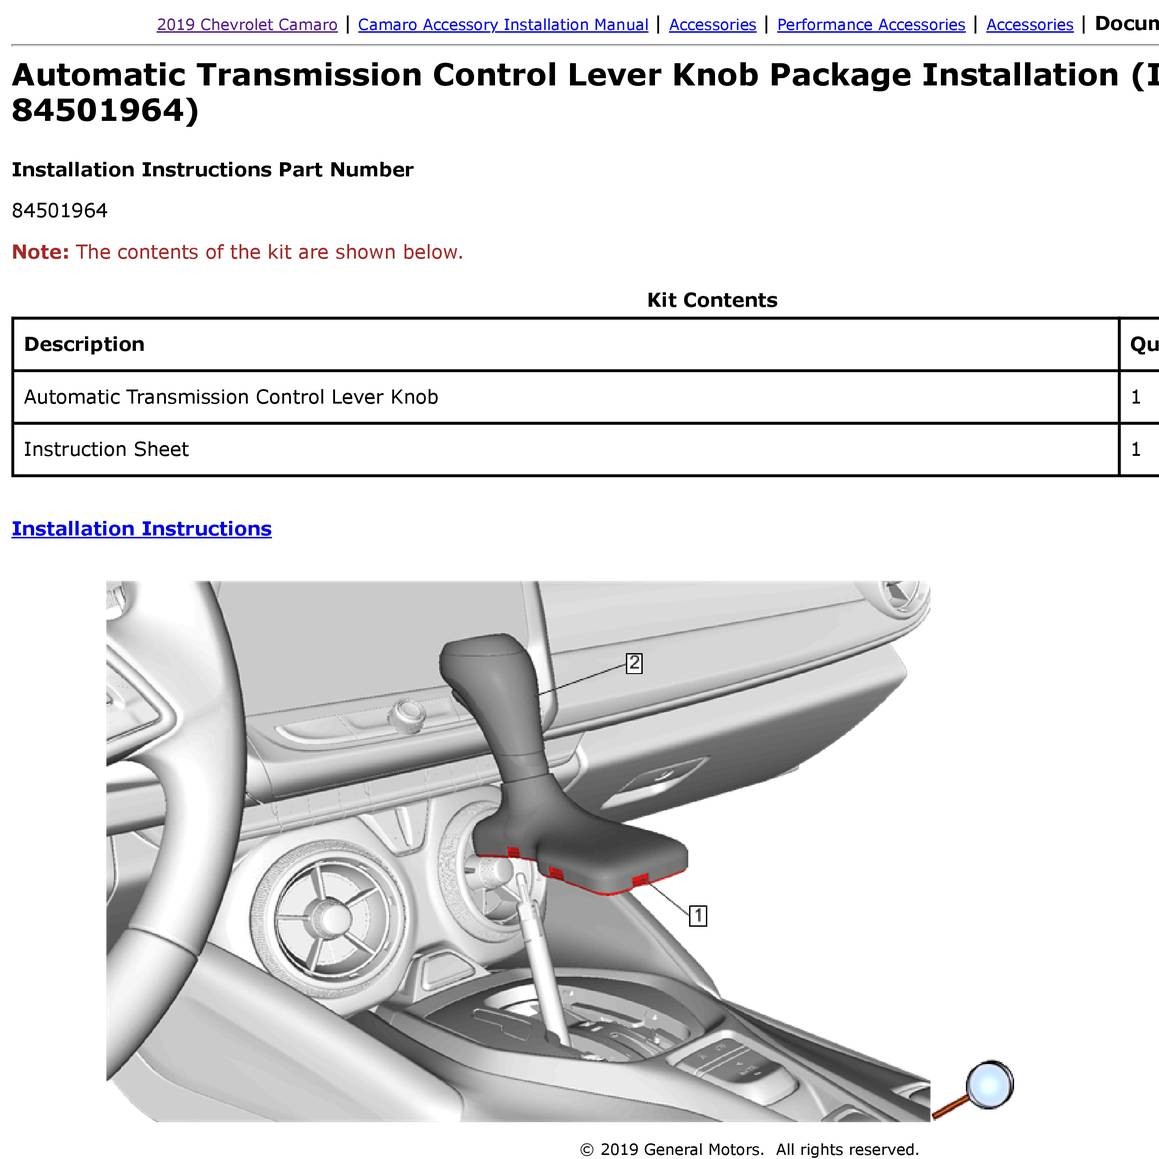 Automatic Shift Knob Installation Instructions.pdf | DocDroid